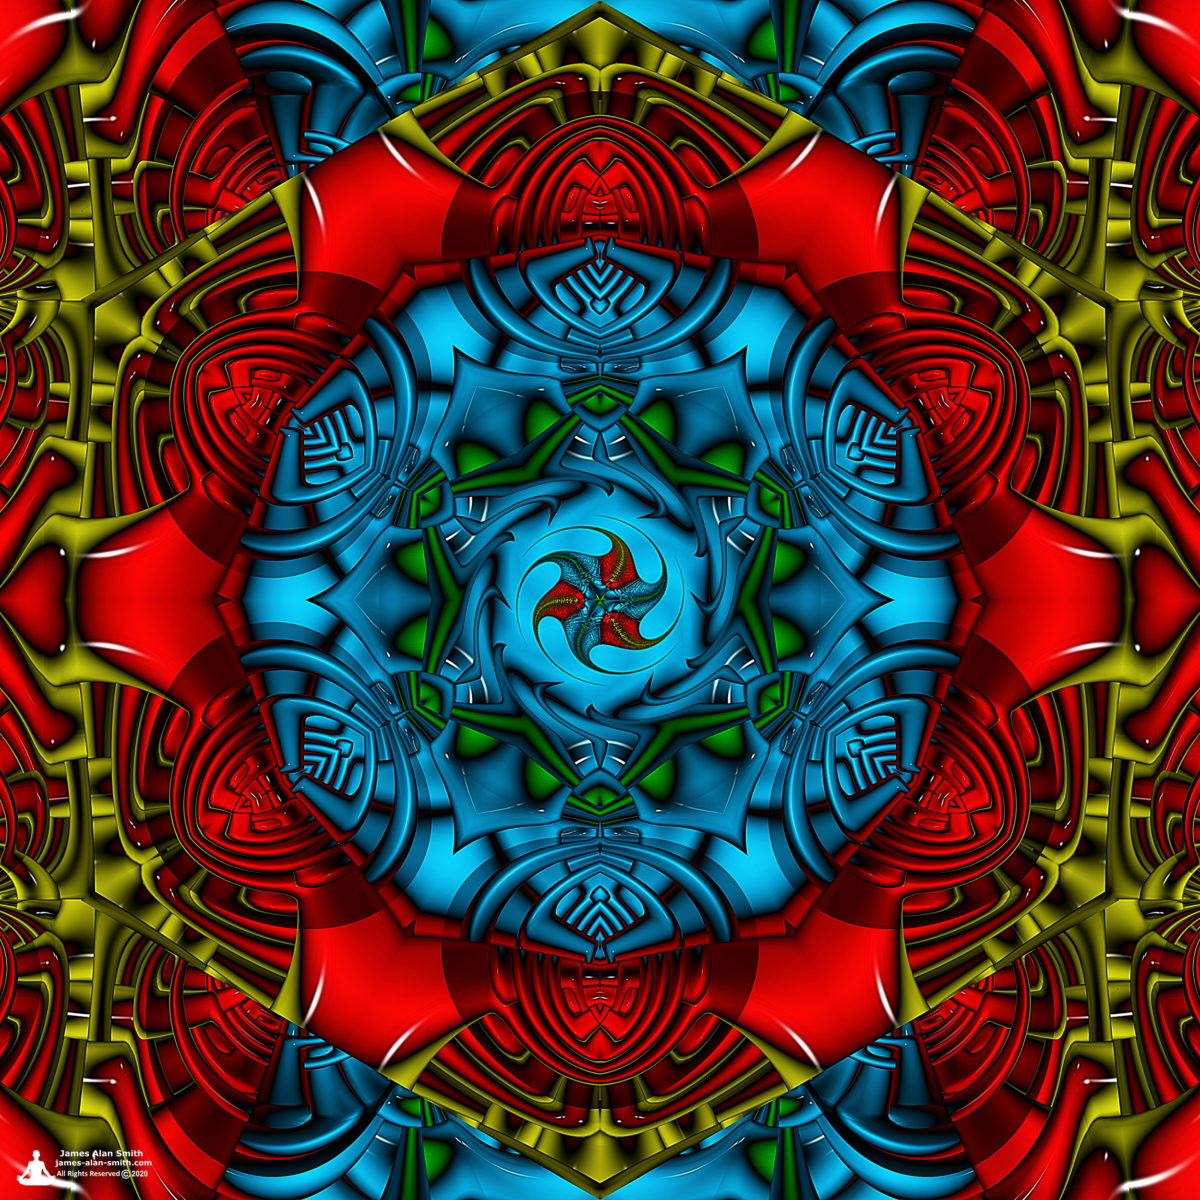 Unusual Mandala Series #02142020: Artwork by James Alan Smith